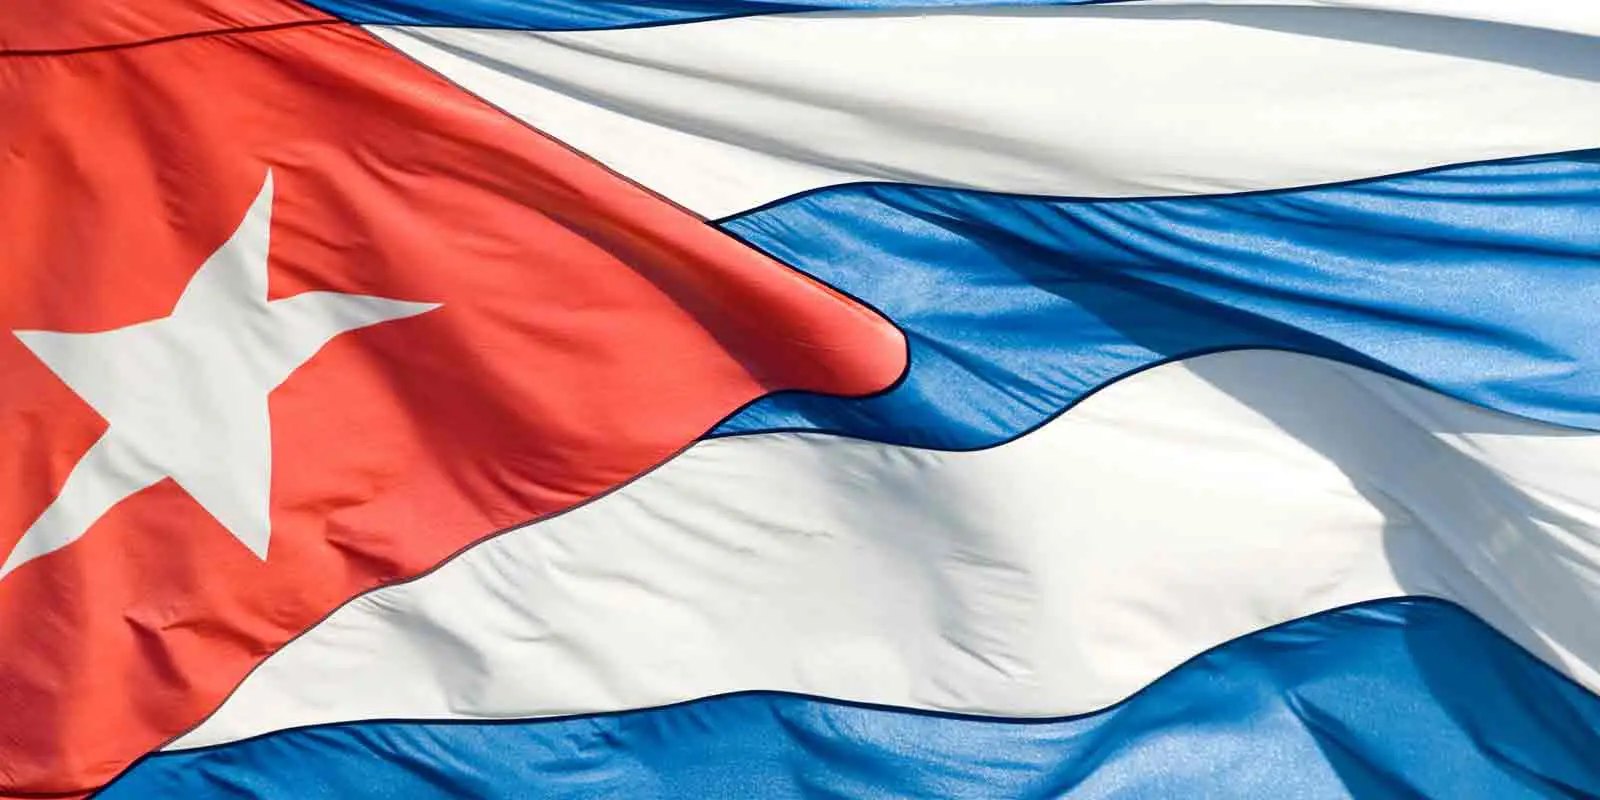 Cuban flag waving in the wind.